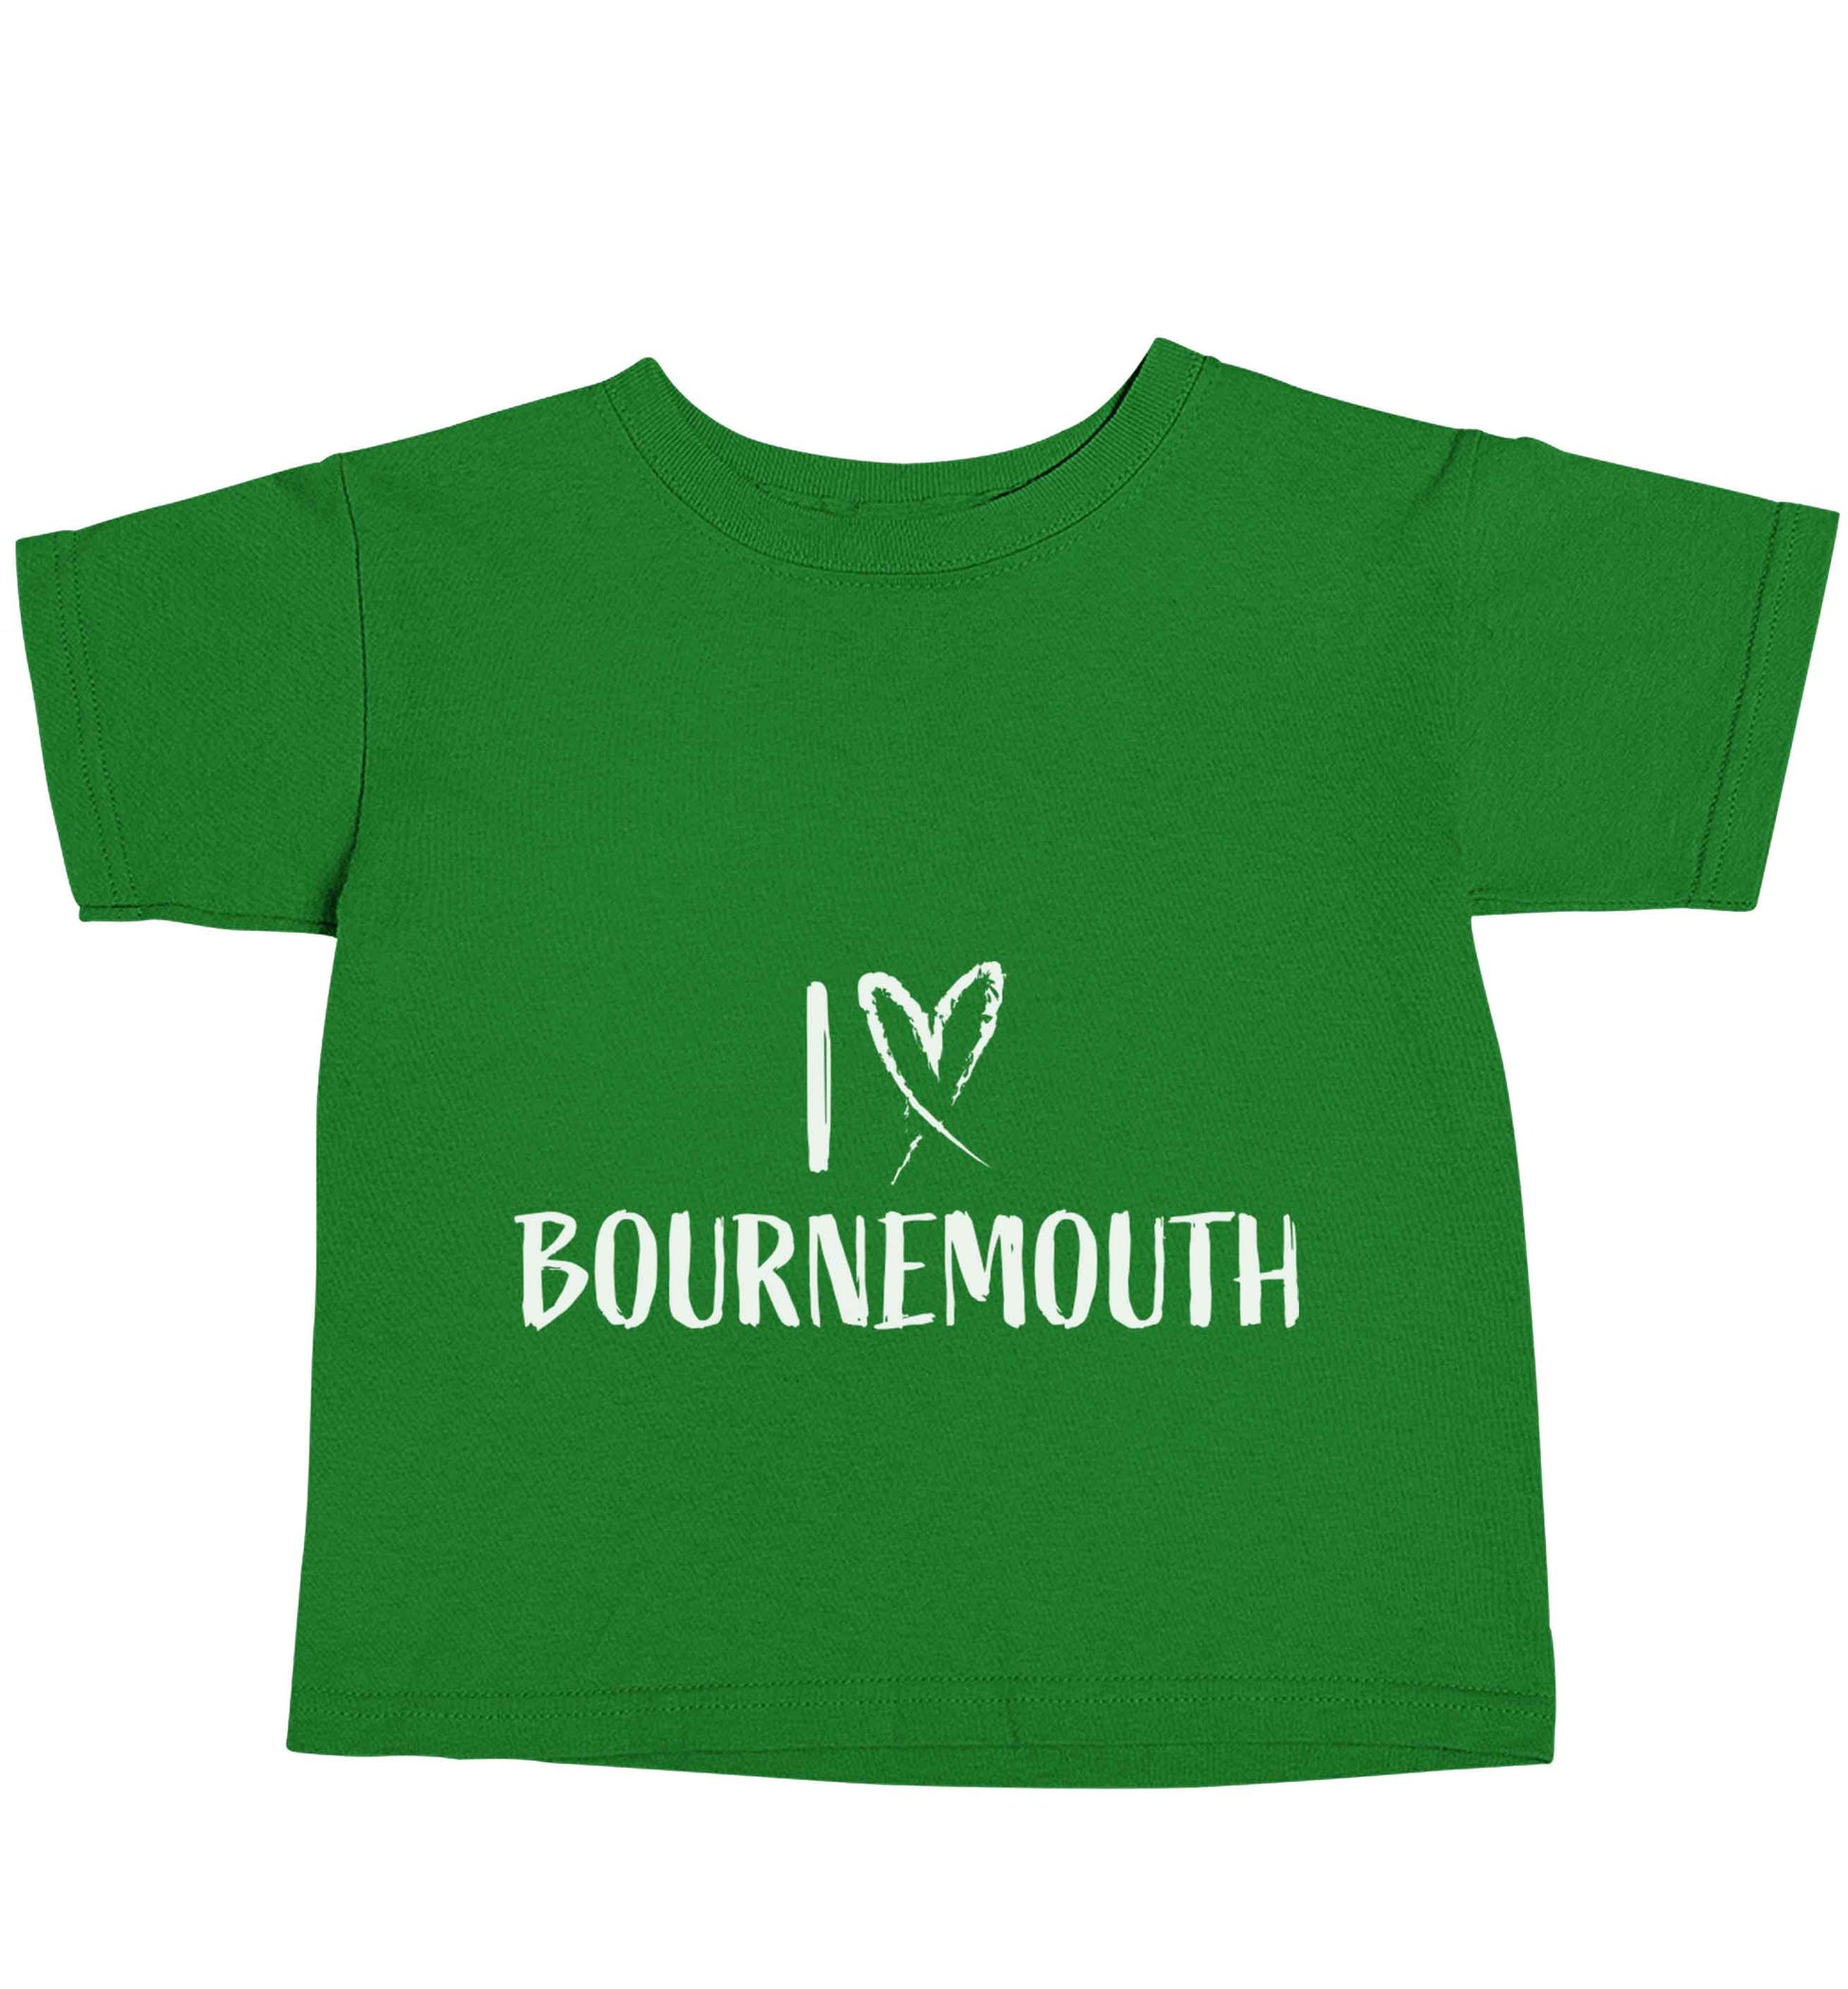 I love Bournemouth green baby toddler Tshirt 2 Years